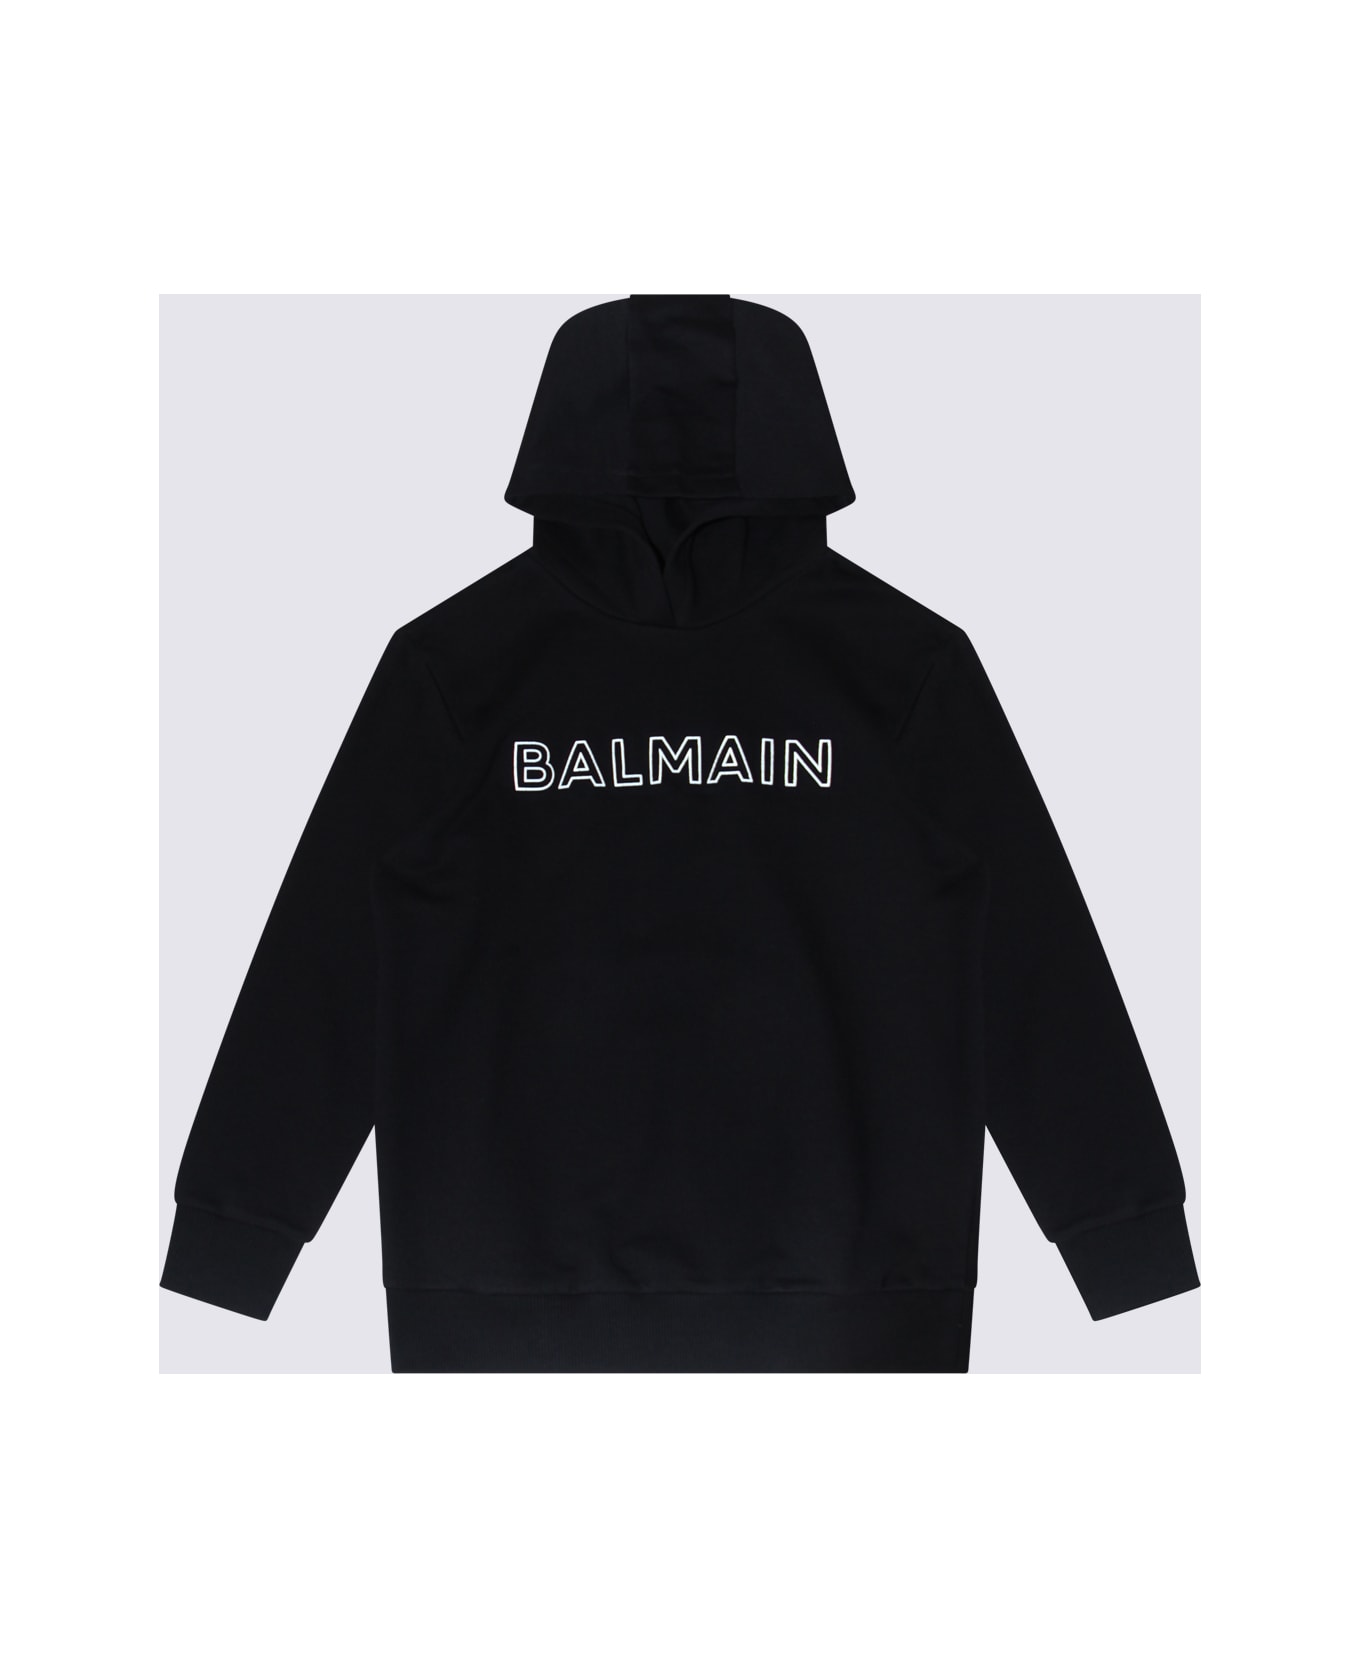 Balmain Black And Silver Cotton Sweatshirt - Black